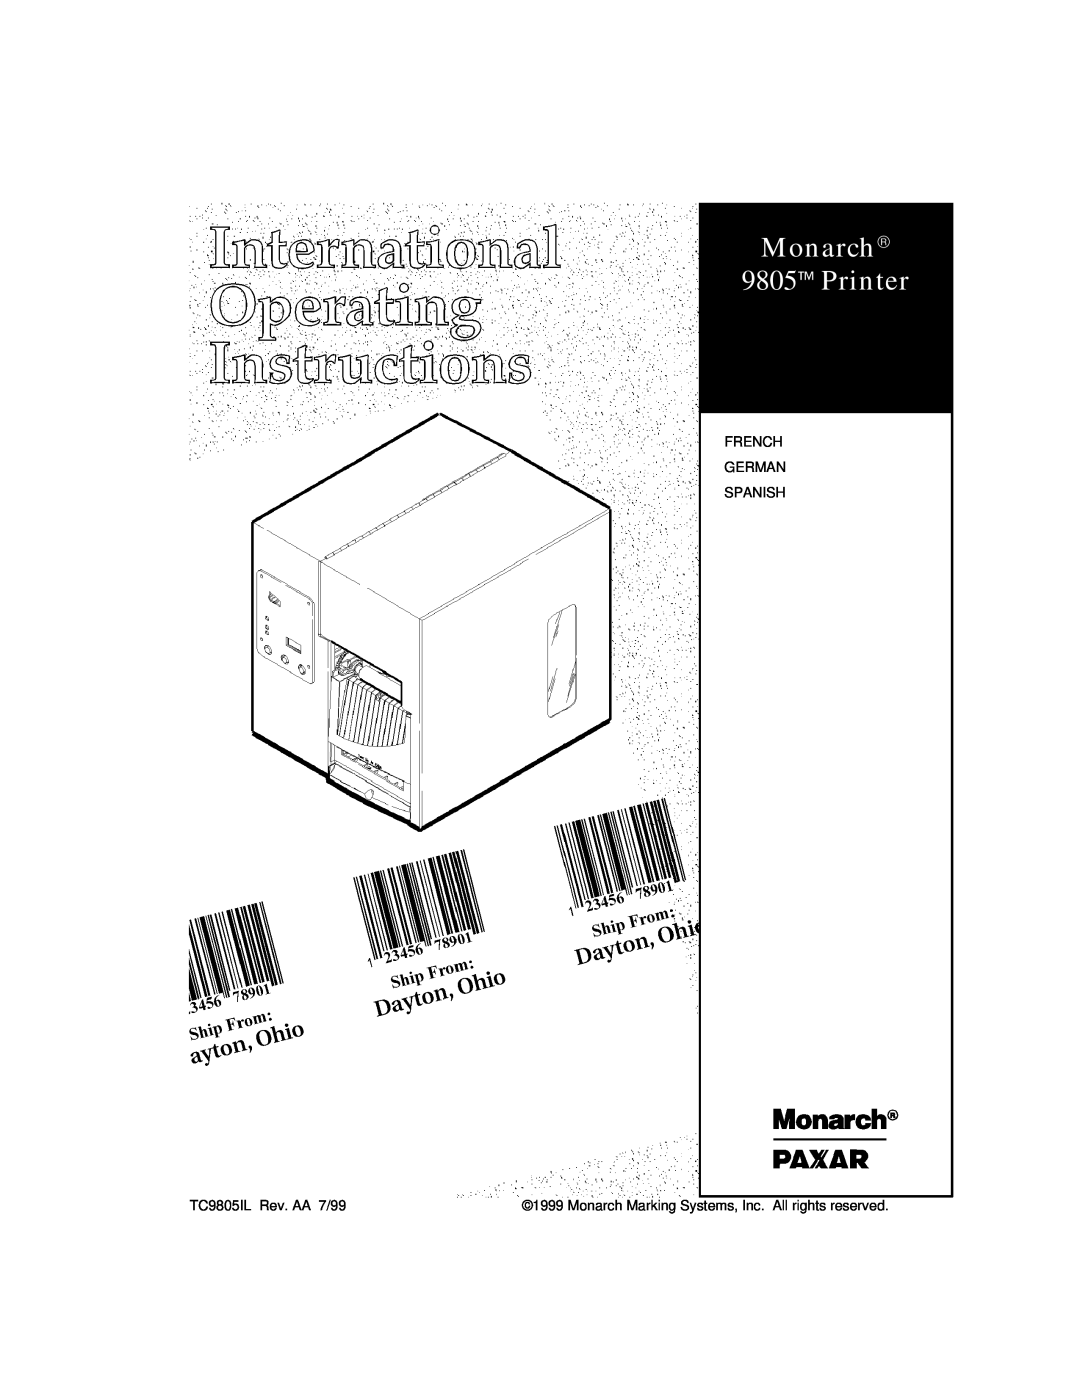 Paxar manual Monarch 9805 Printer, French German Spanish, TC9805IL Rev. AA 7/99 